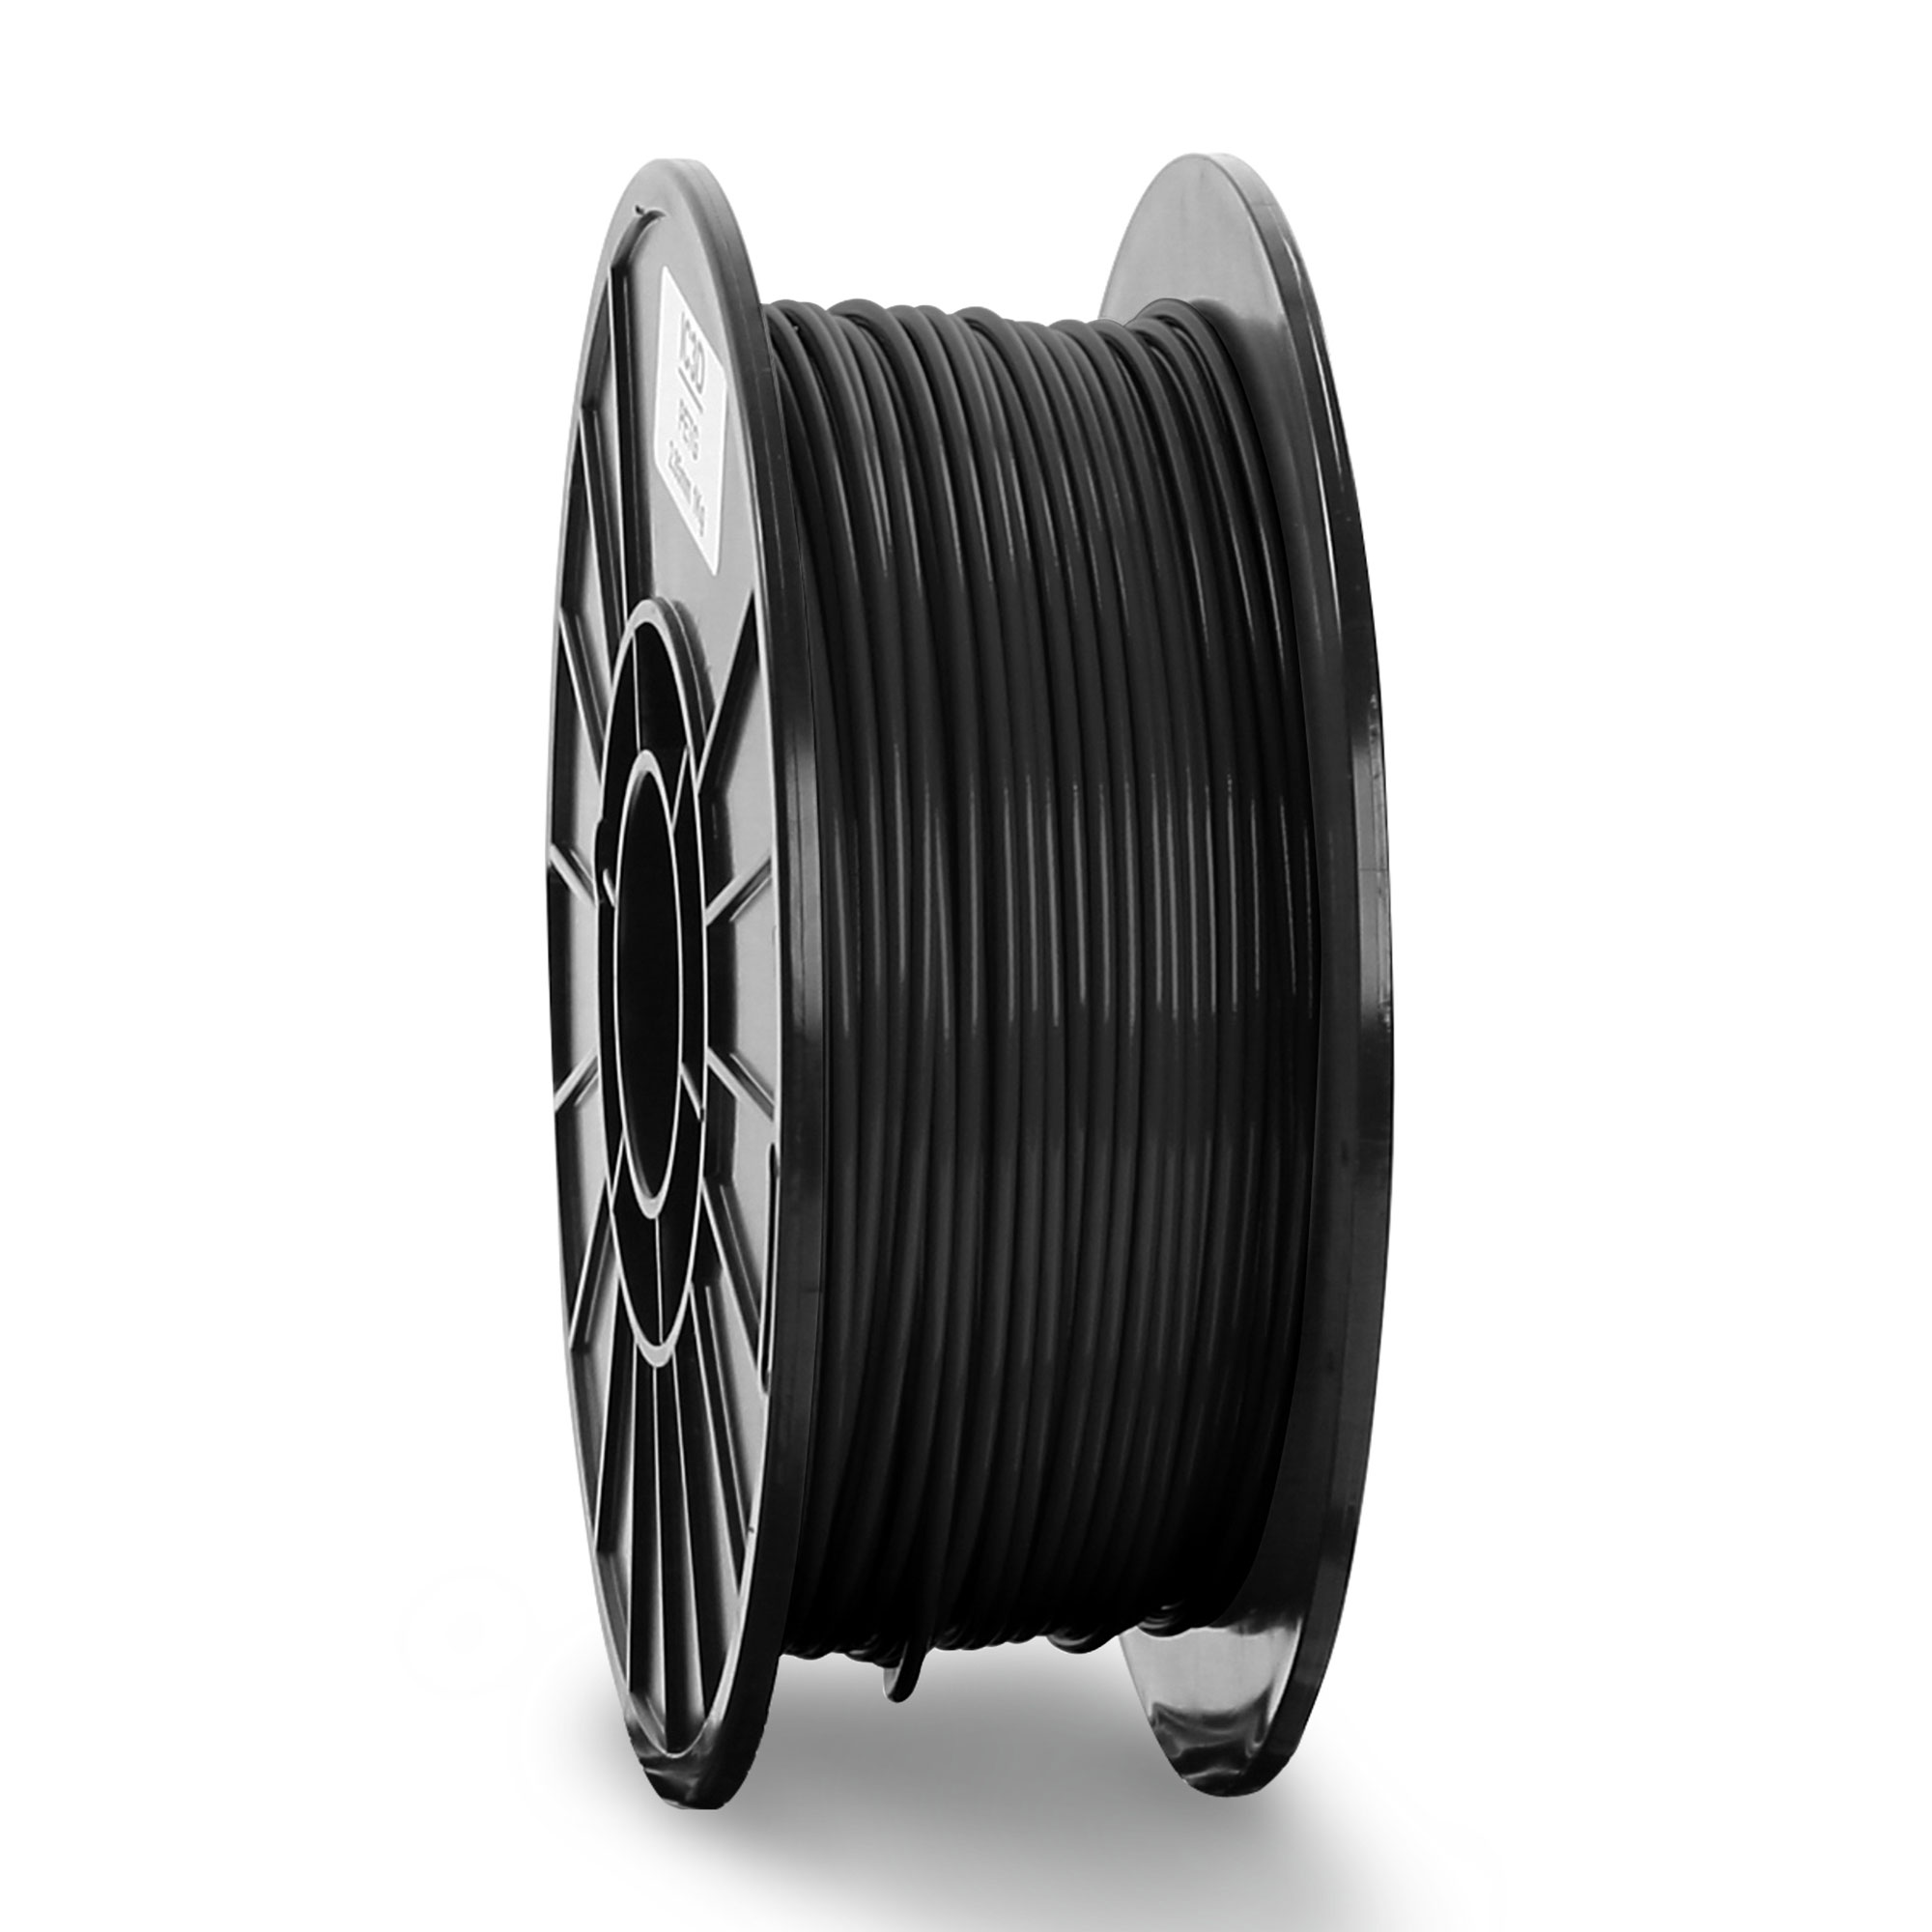 Ic3d Petg Black, 3mm Filament, 1kg